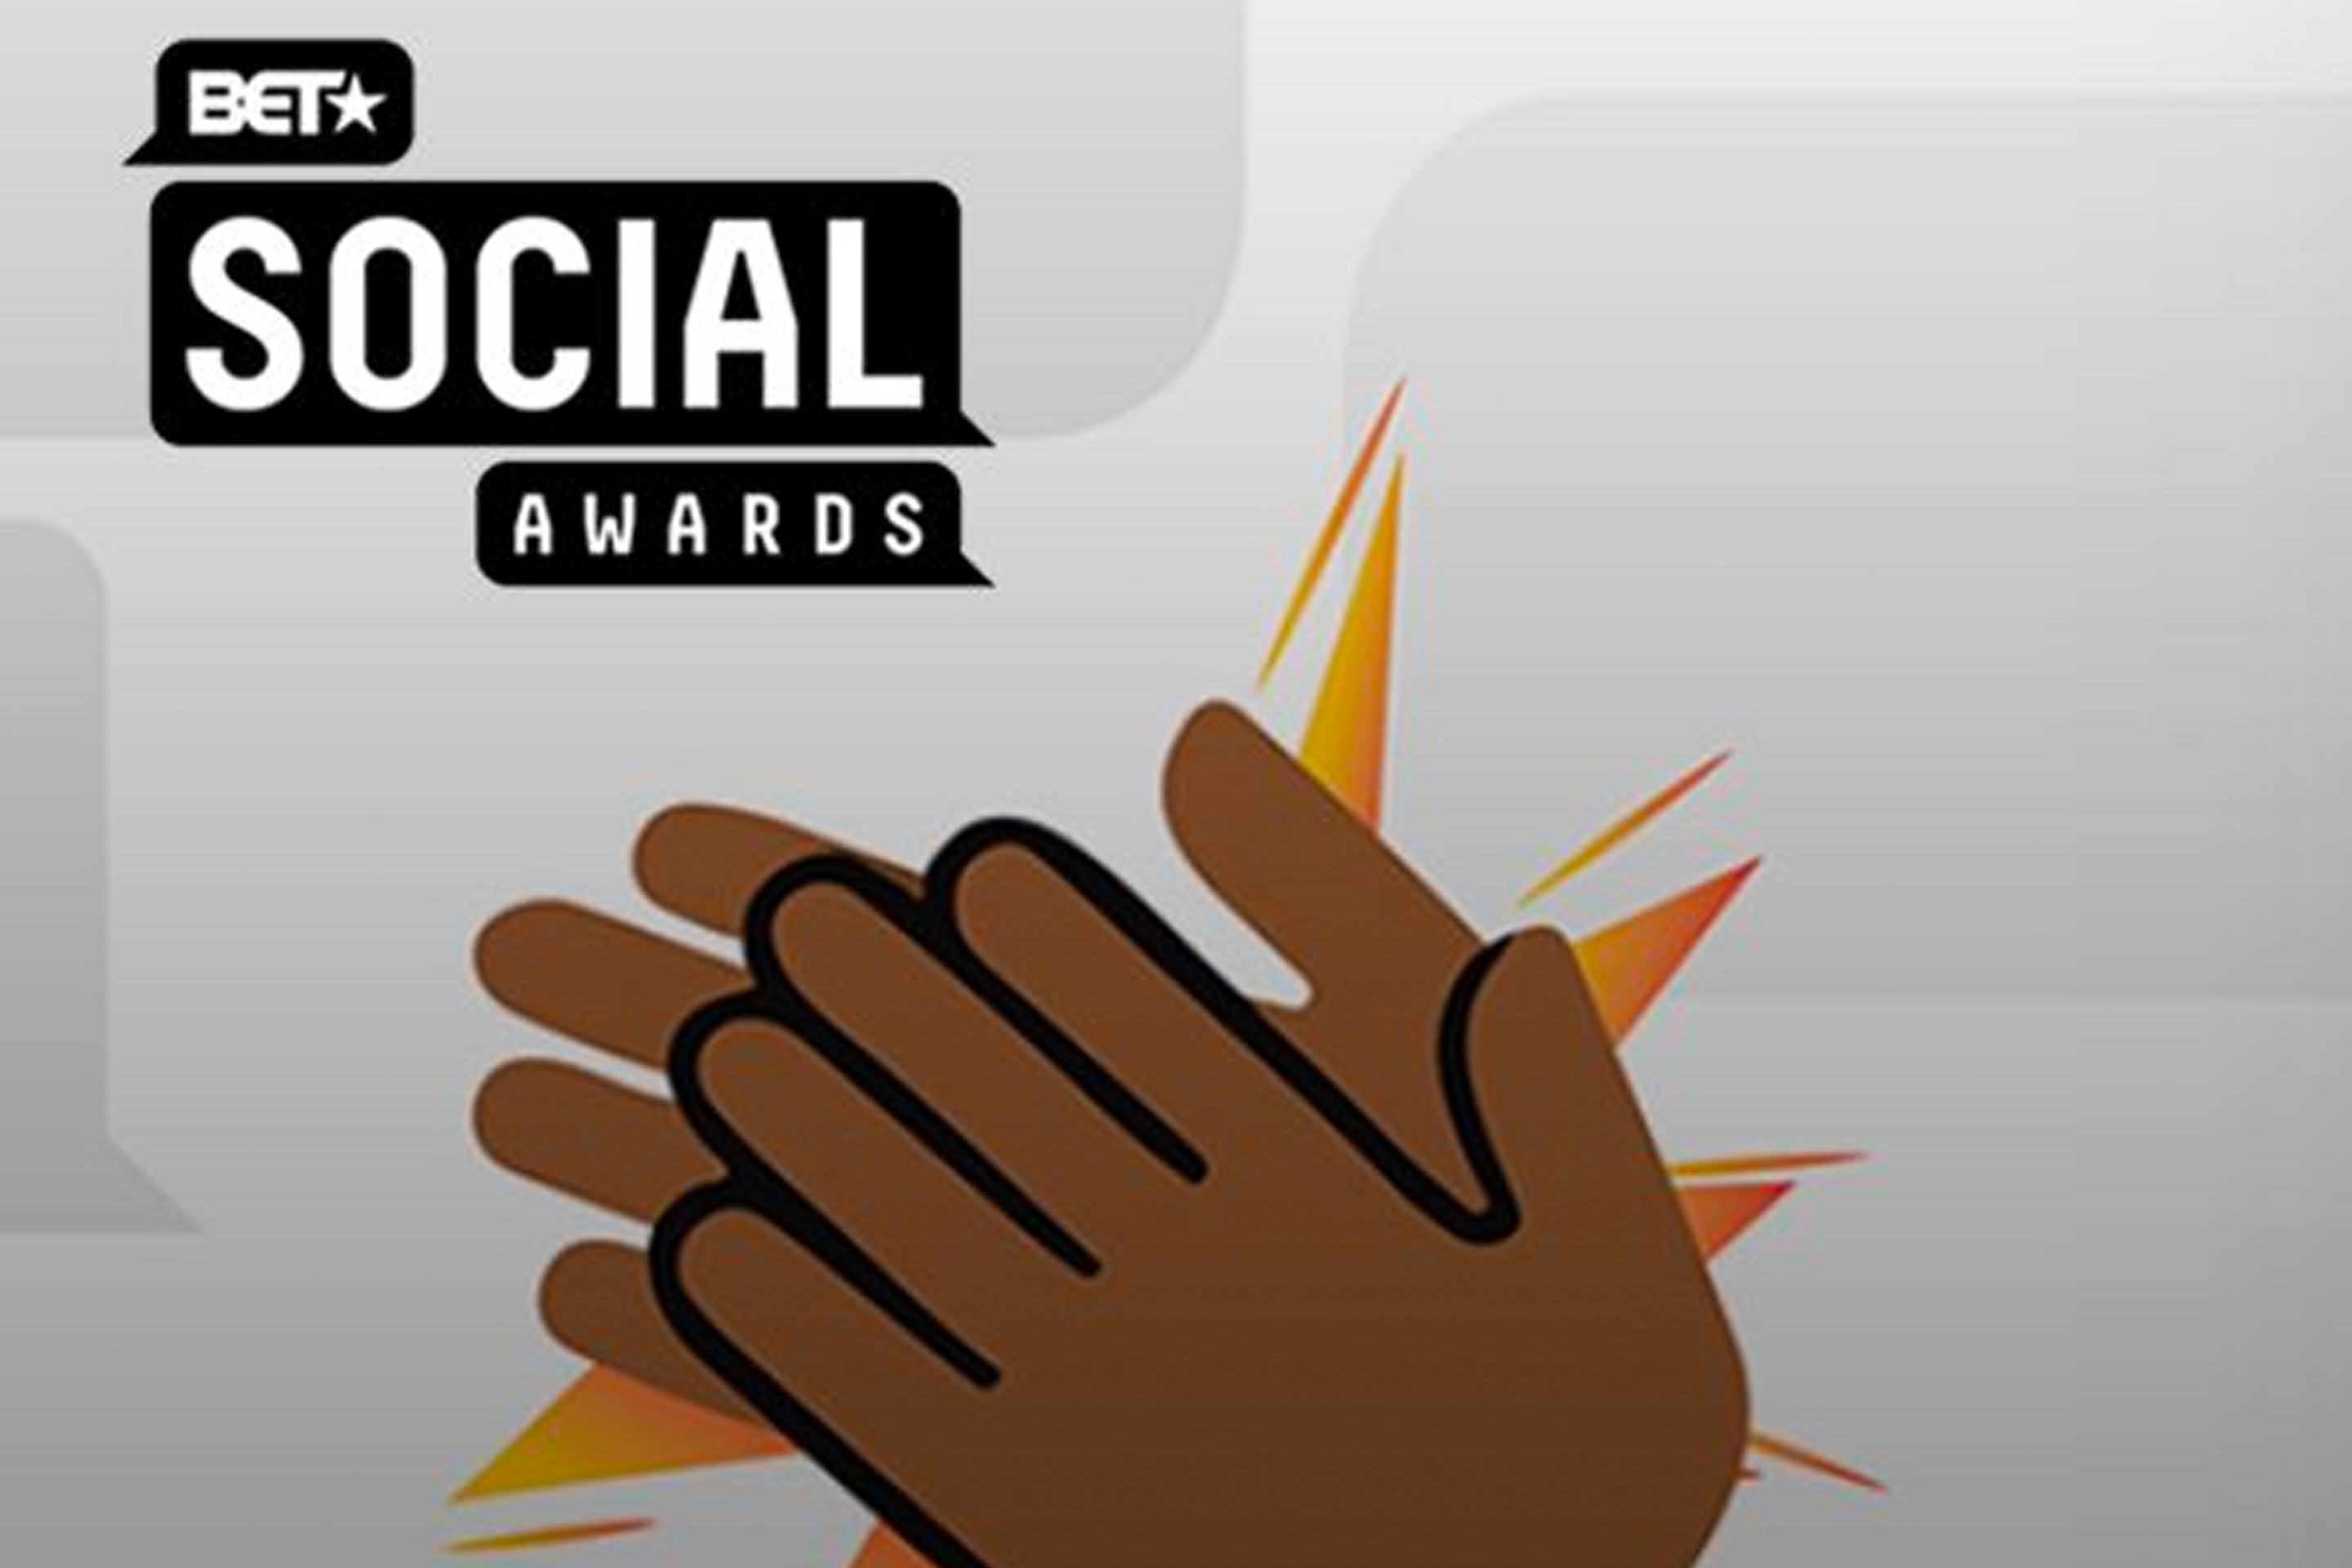 Bet Social Awards Clapping